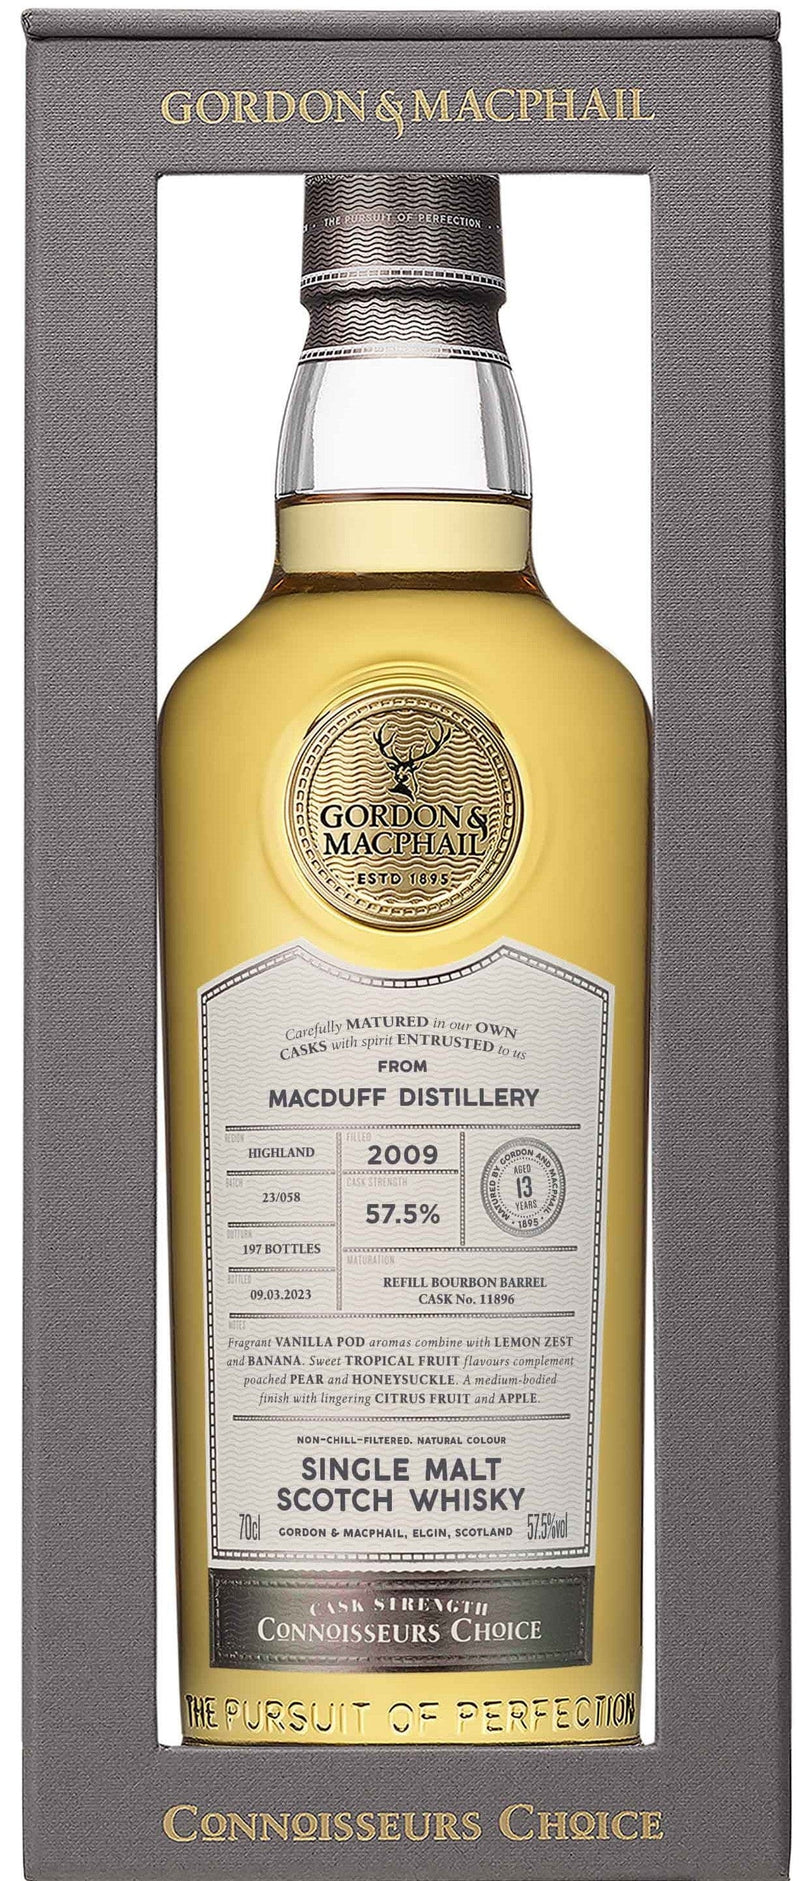 Macduff Distillery 2009 70cl (Gordon & MacPhail Connoisseurs Choice)